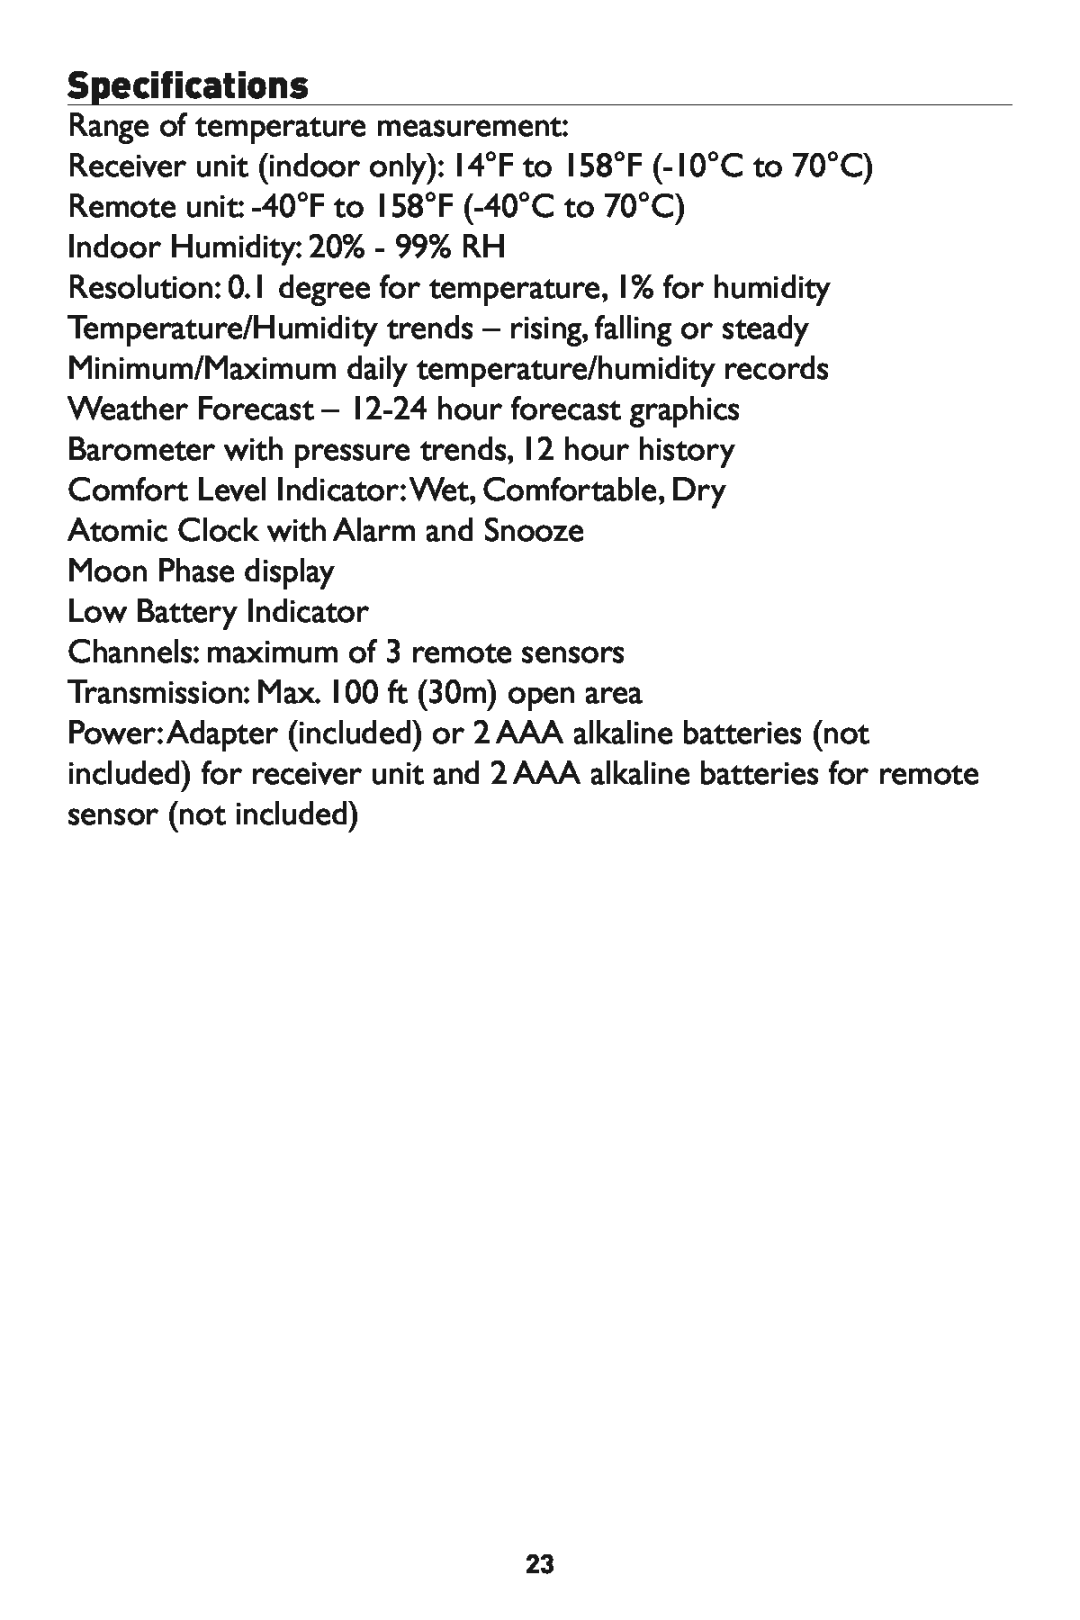 Taylor 1528 instruction manual Range of temperature measurement 